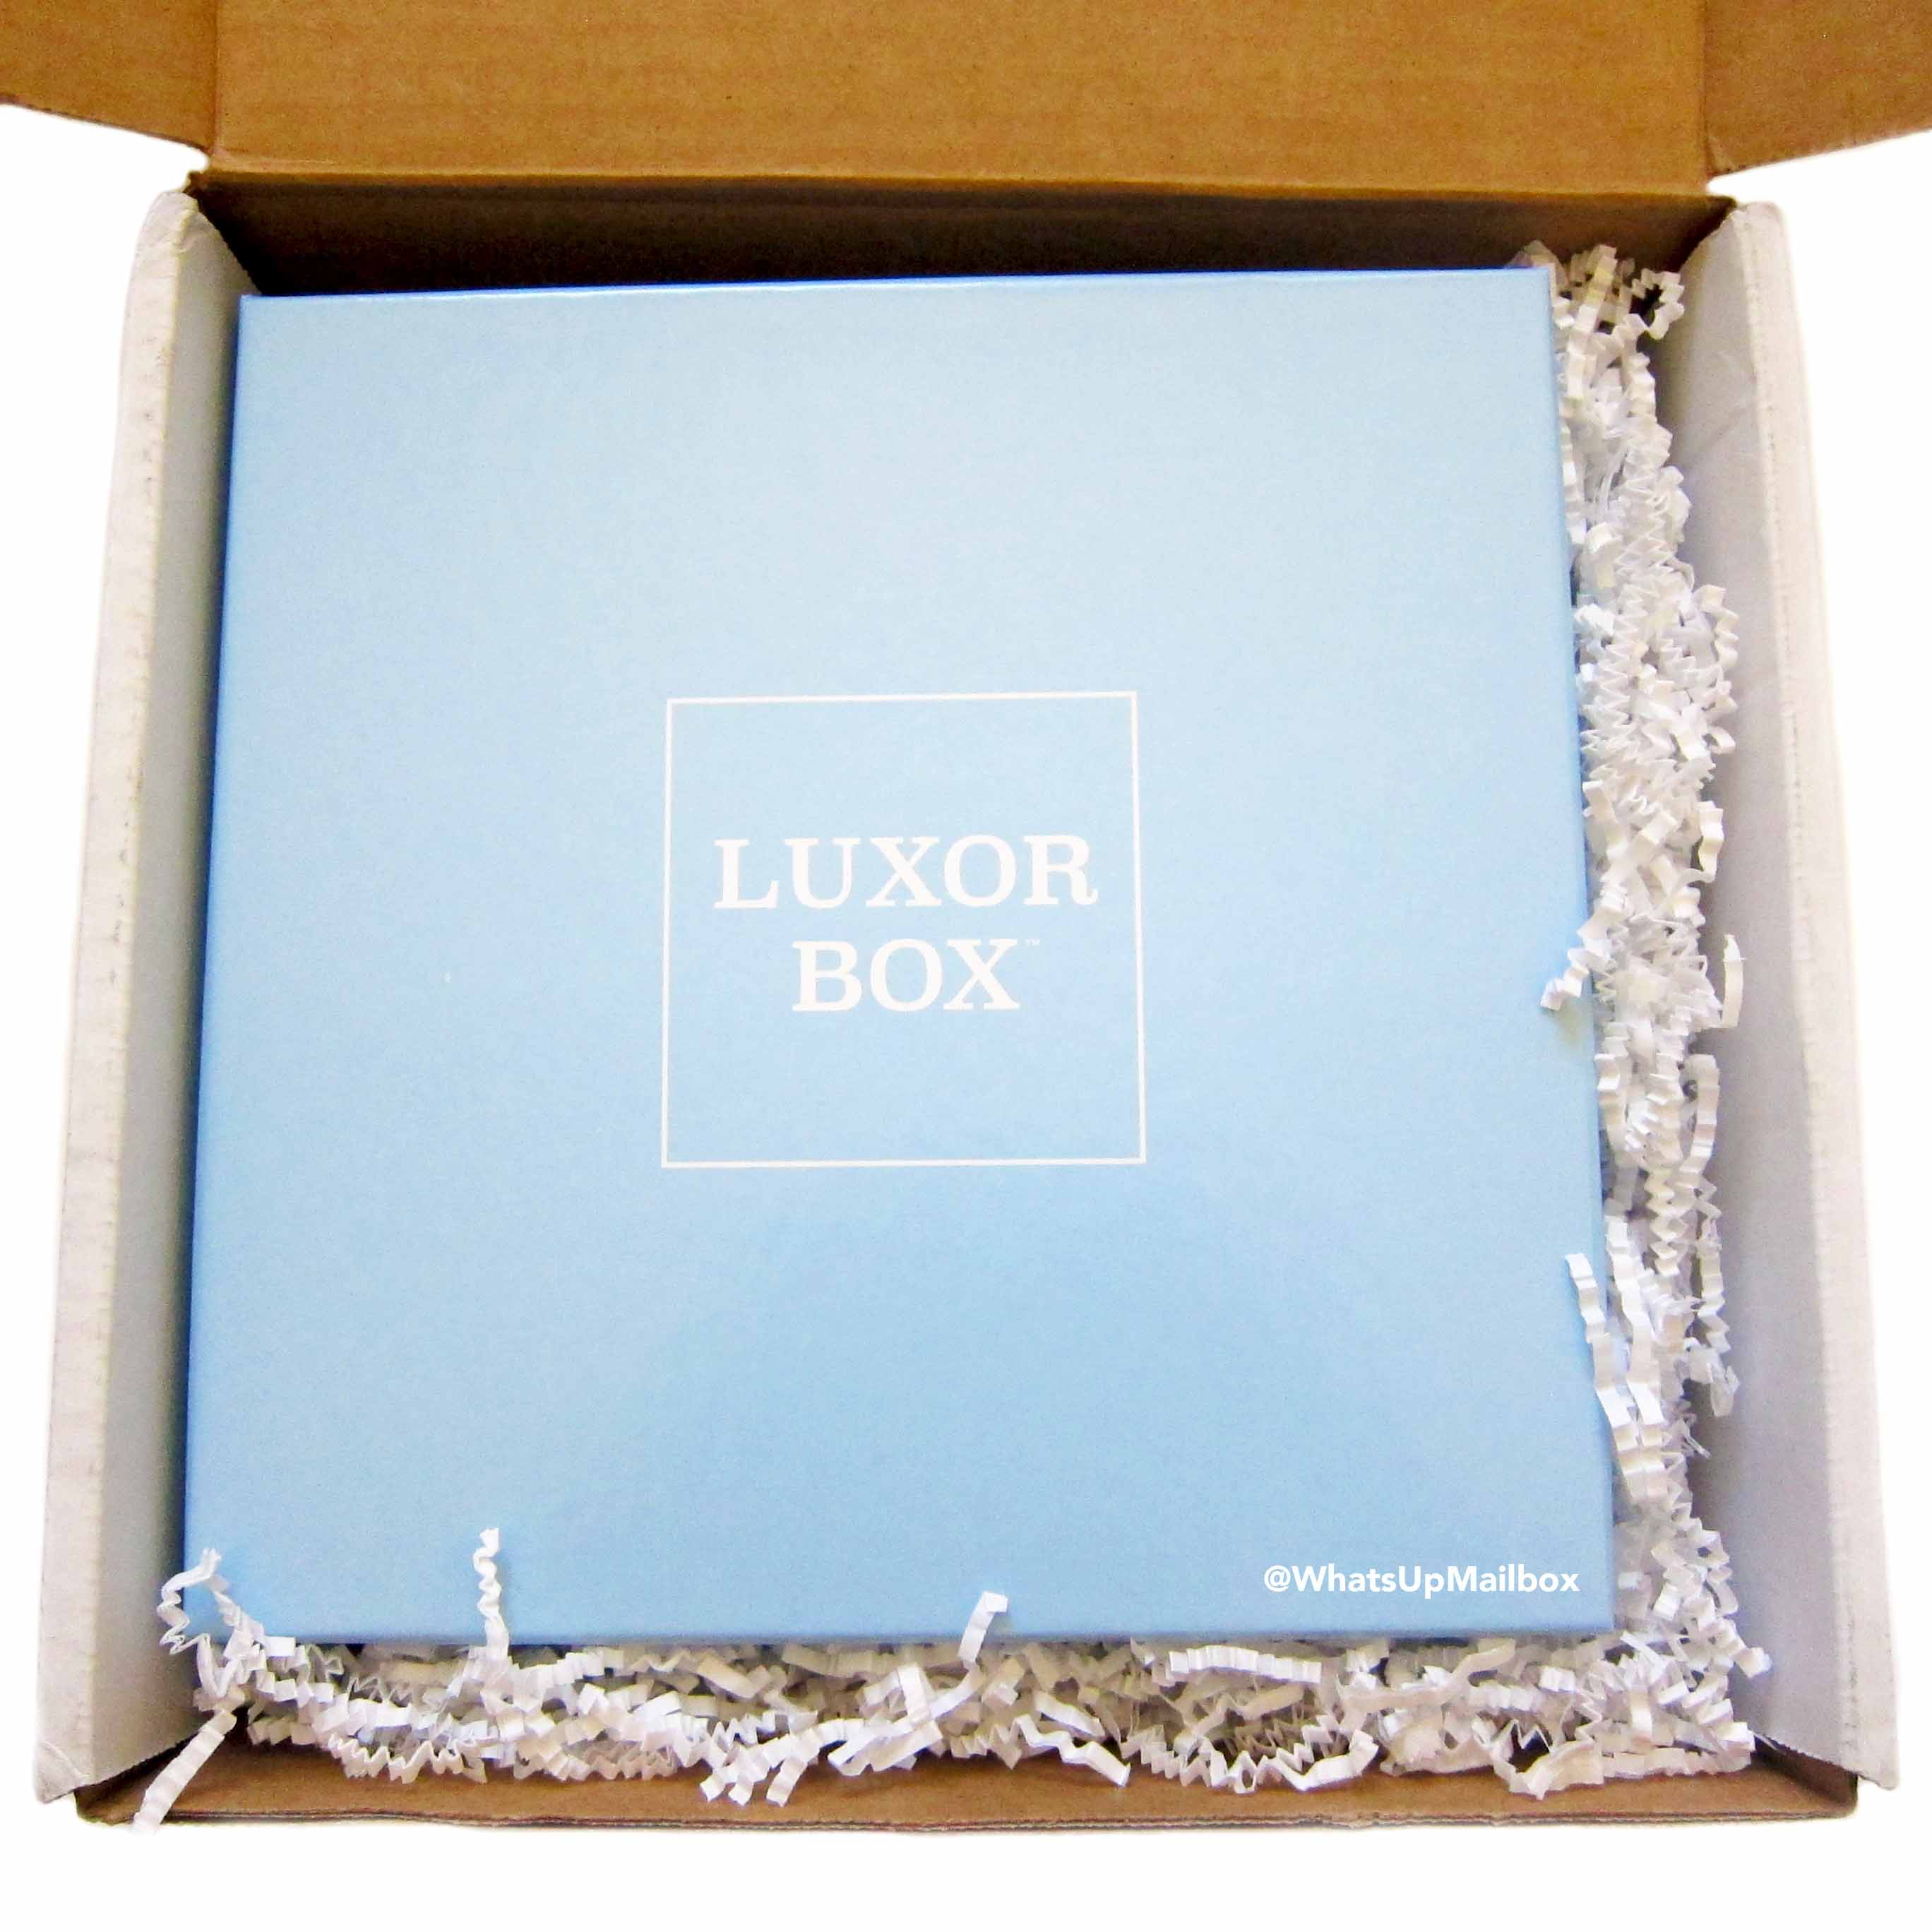 Luxor Box Unboxing